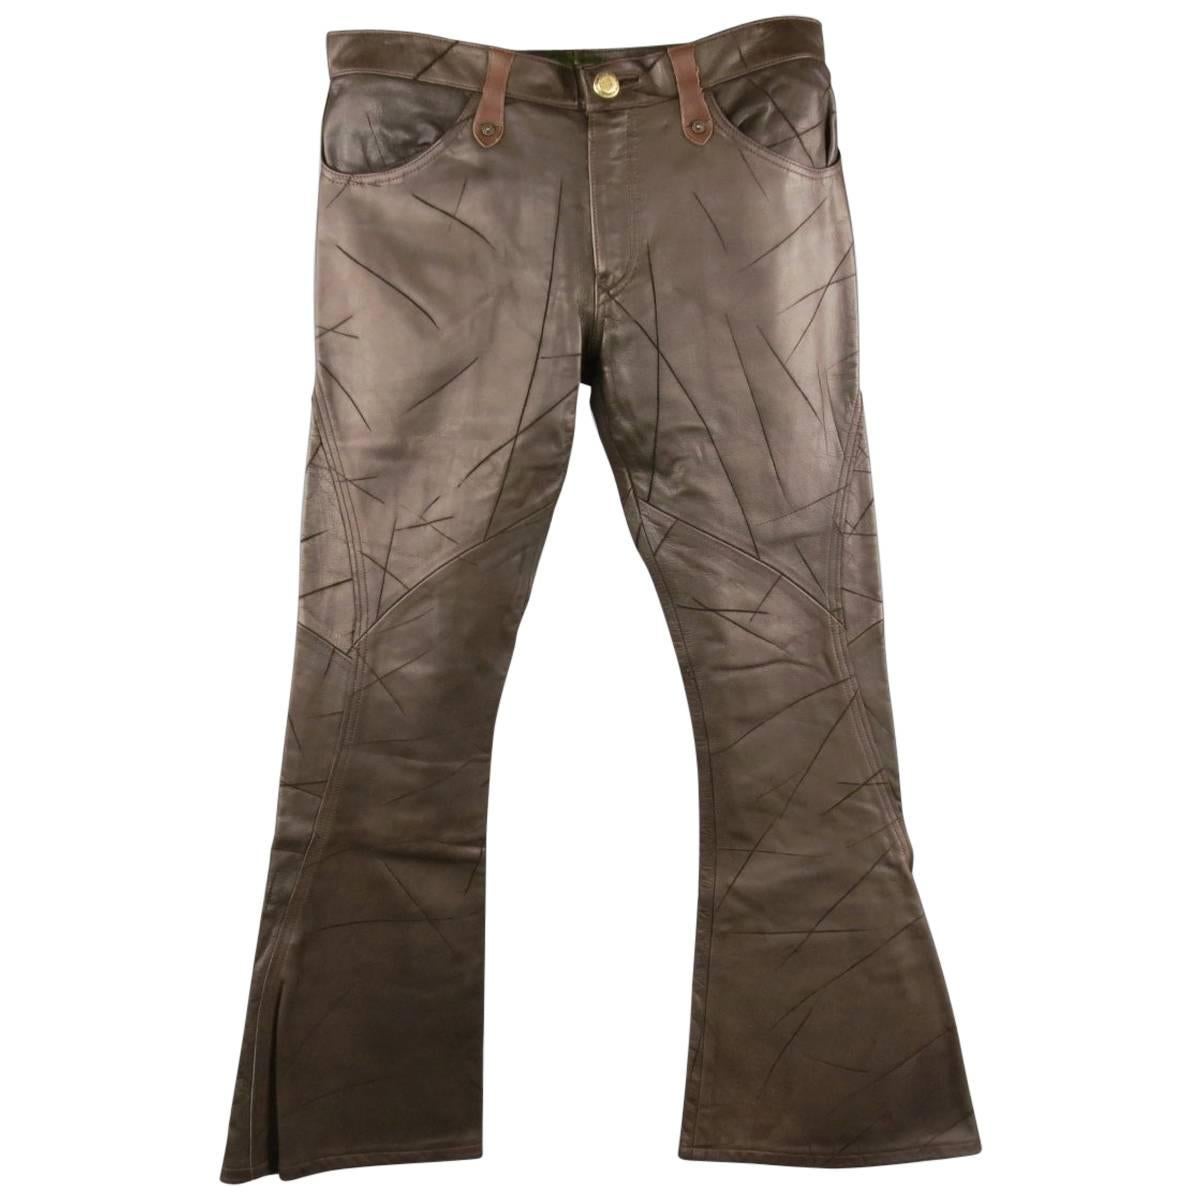 OBELISK Size 32 Brown Distressed Leather Bell Bottom Jeans